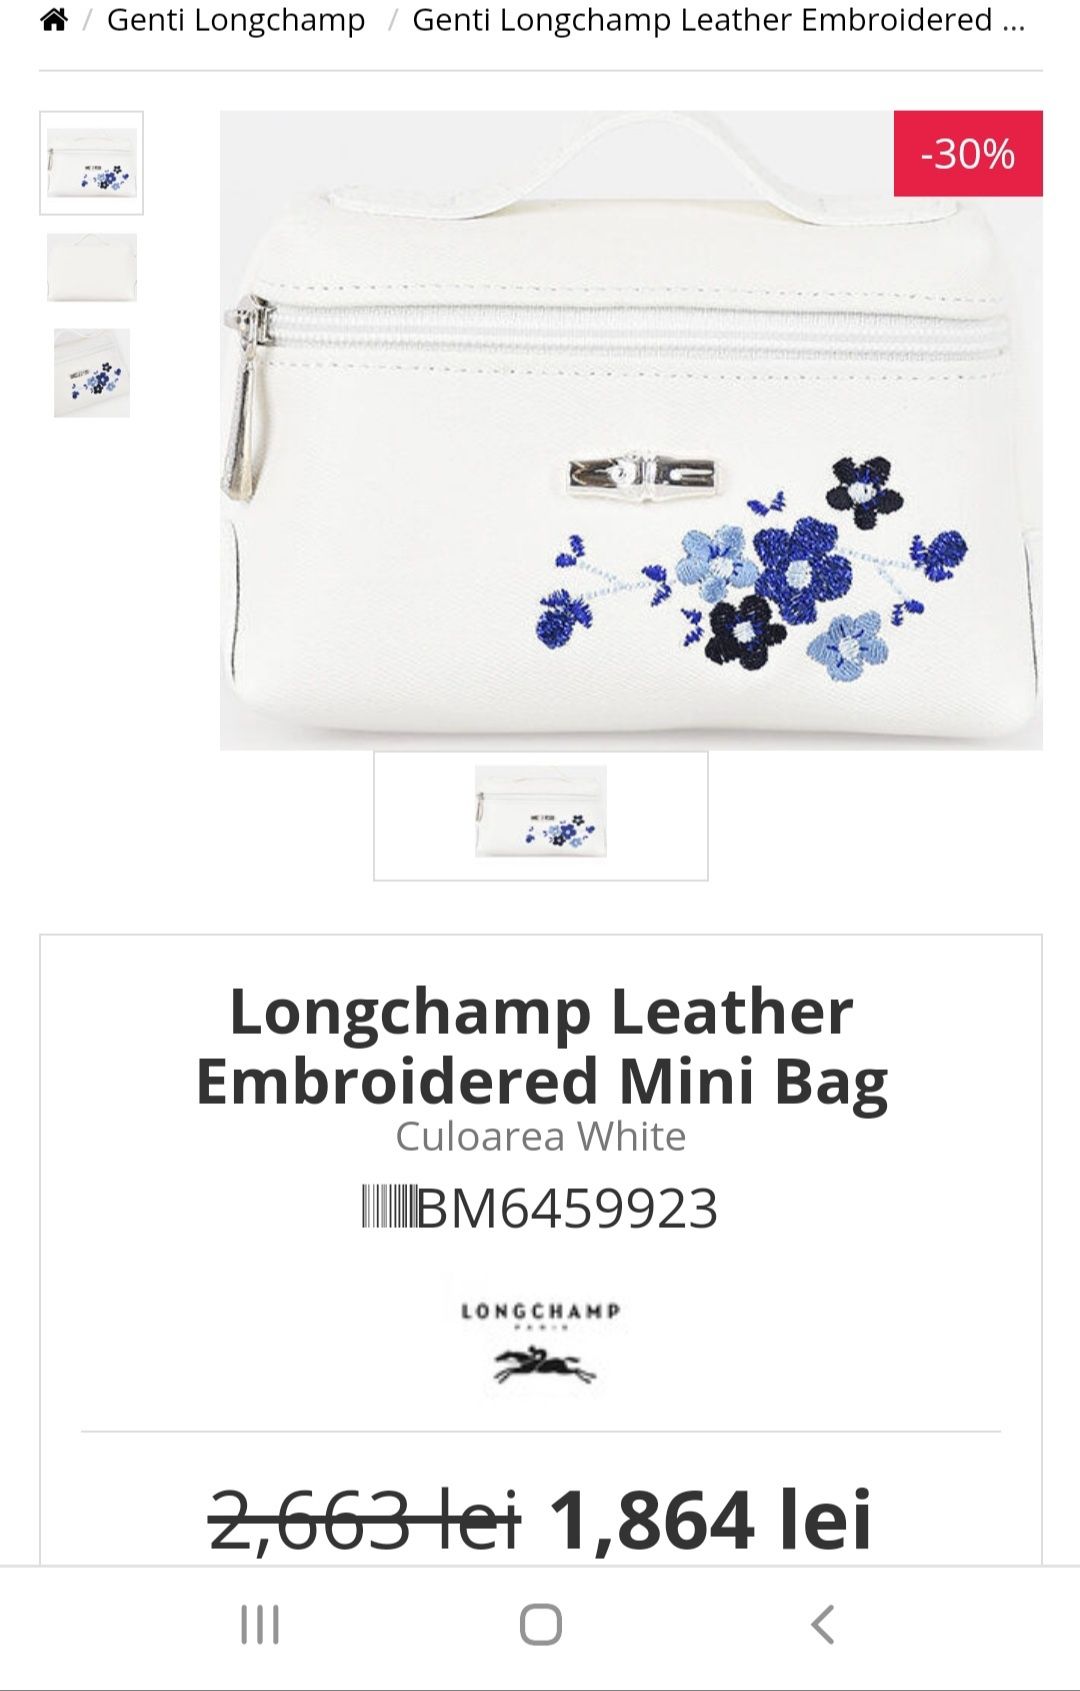 Geanta Longchamp,originala,blana,piele si cristale swarovski,noua